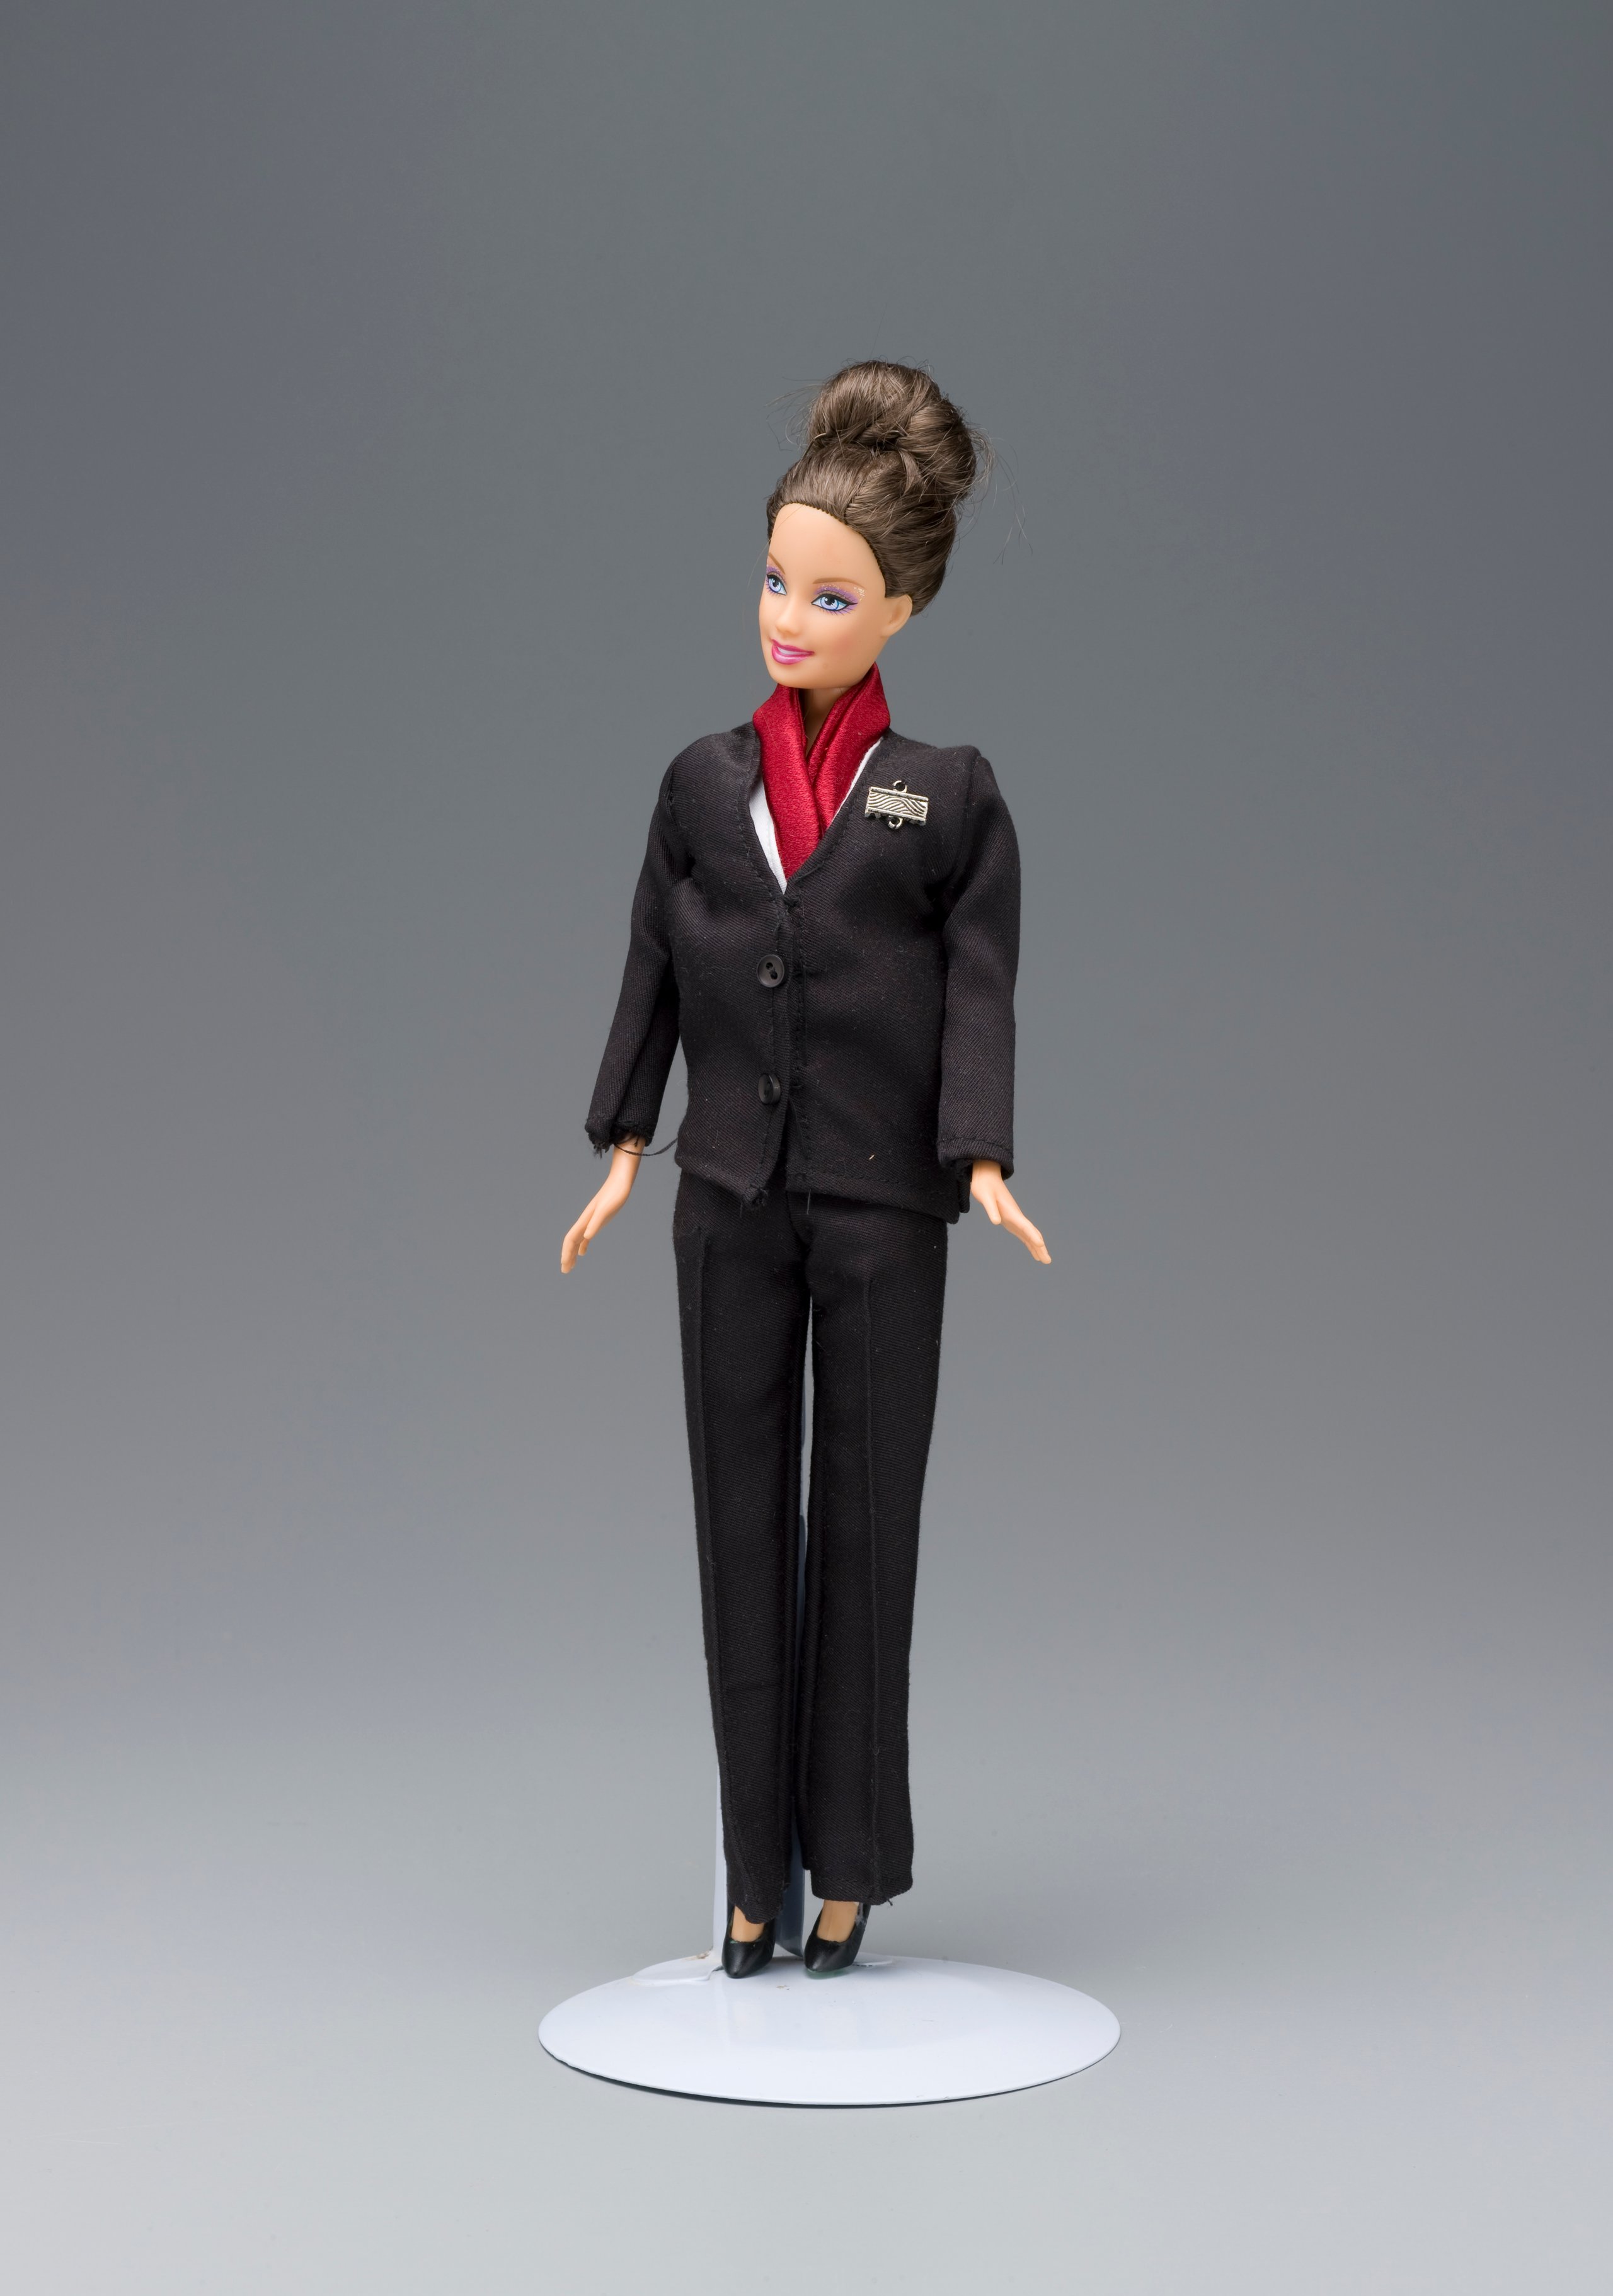 'Barbie' dolls wearing Qantas uniforms